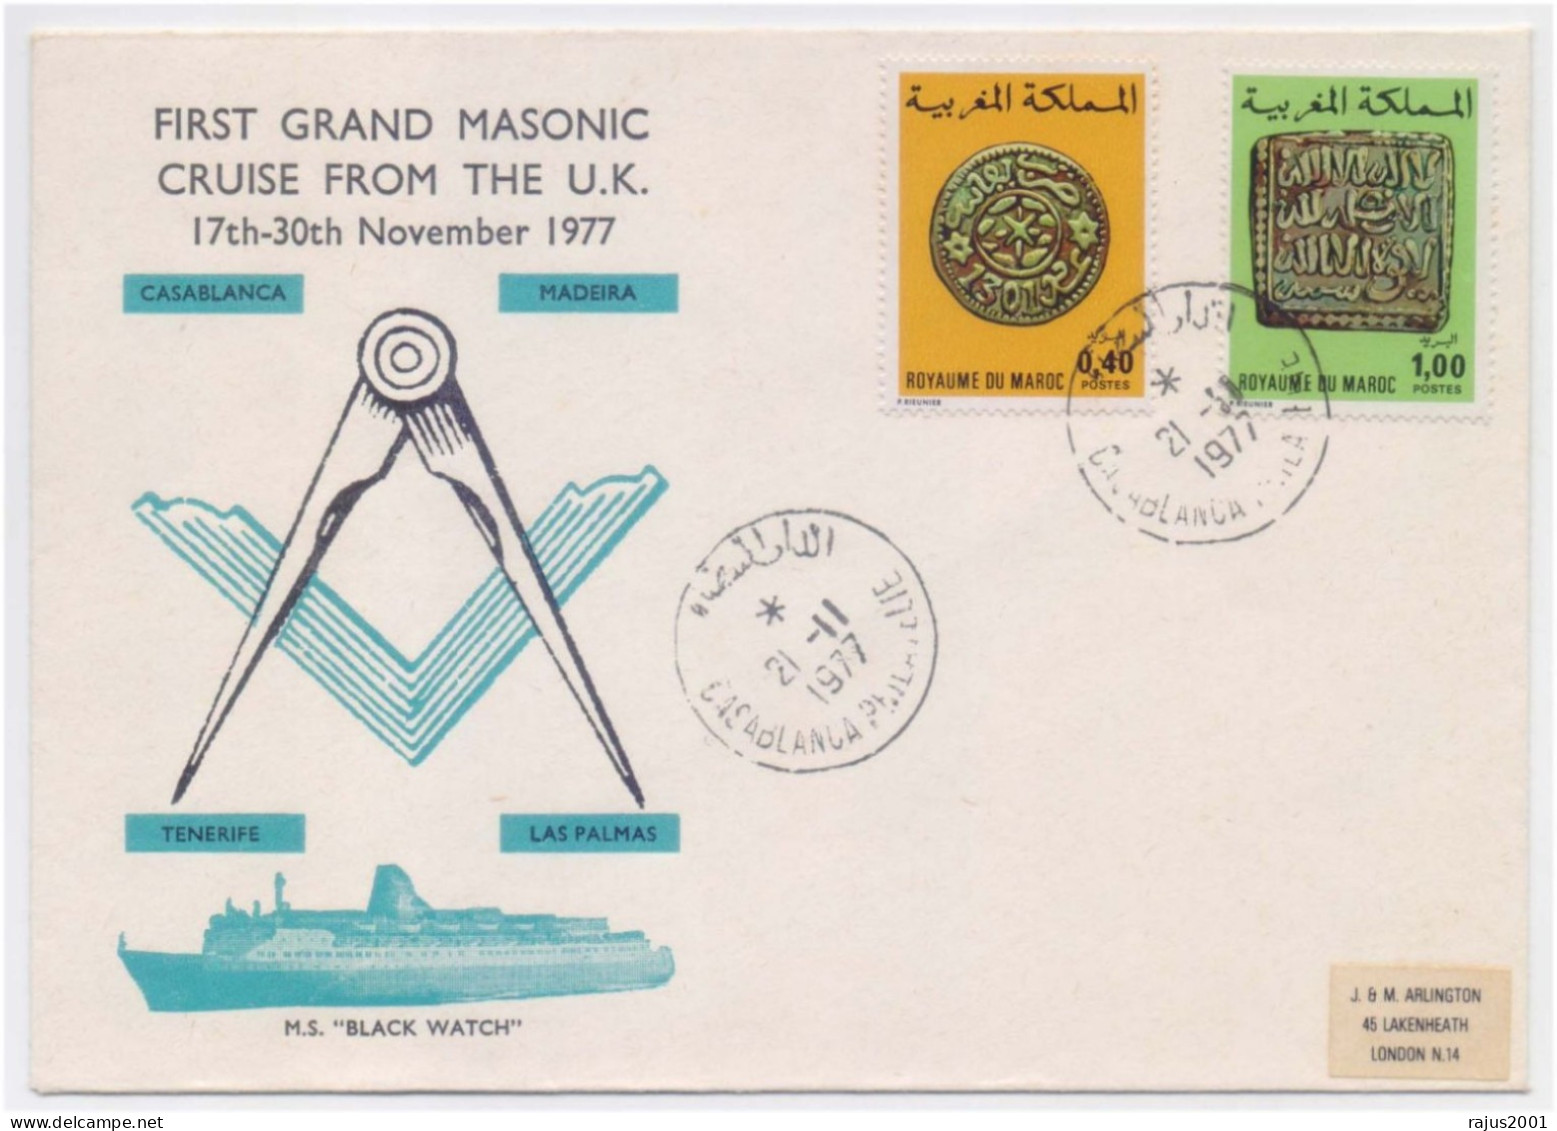 First Grand Masonic Cruise From The U.K. M.S. Black Watch, Coinage, Coin, Freemasonry Masonic Morocco FDC - Francmasonería